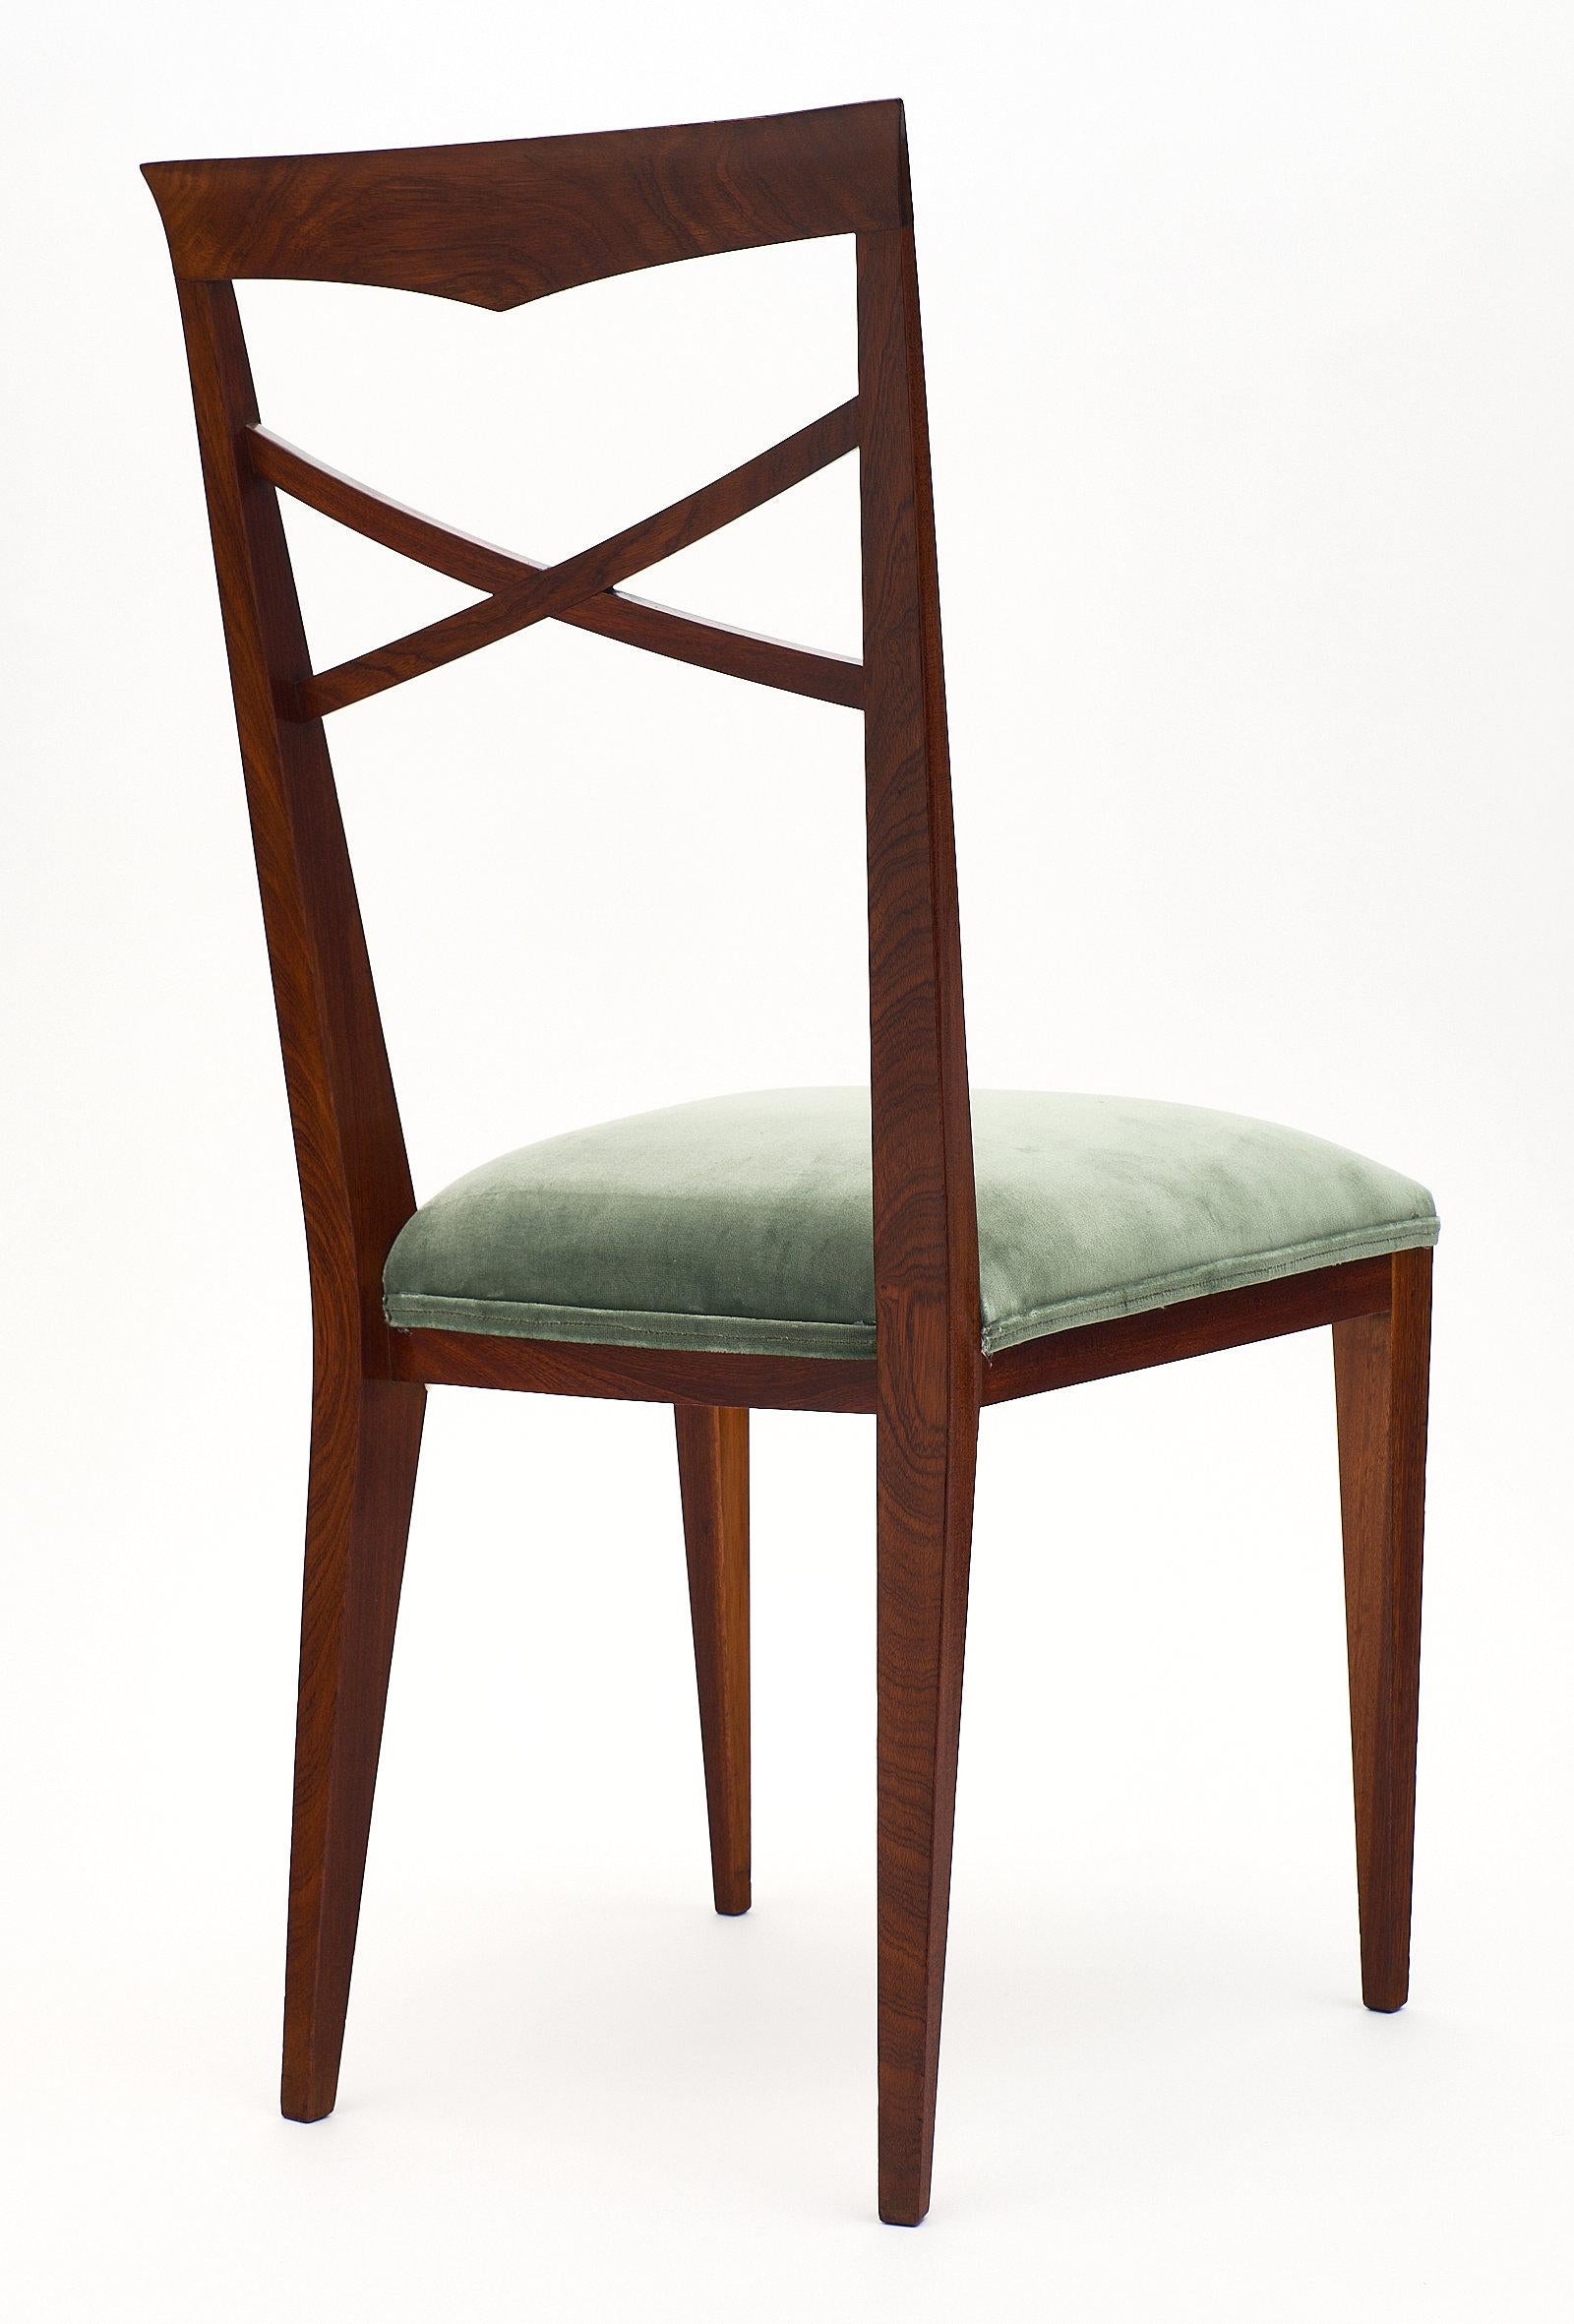 Mid-20th Century Paolo Buffa Style Italian Dining Chairs